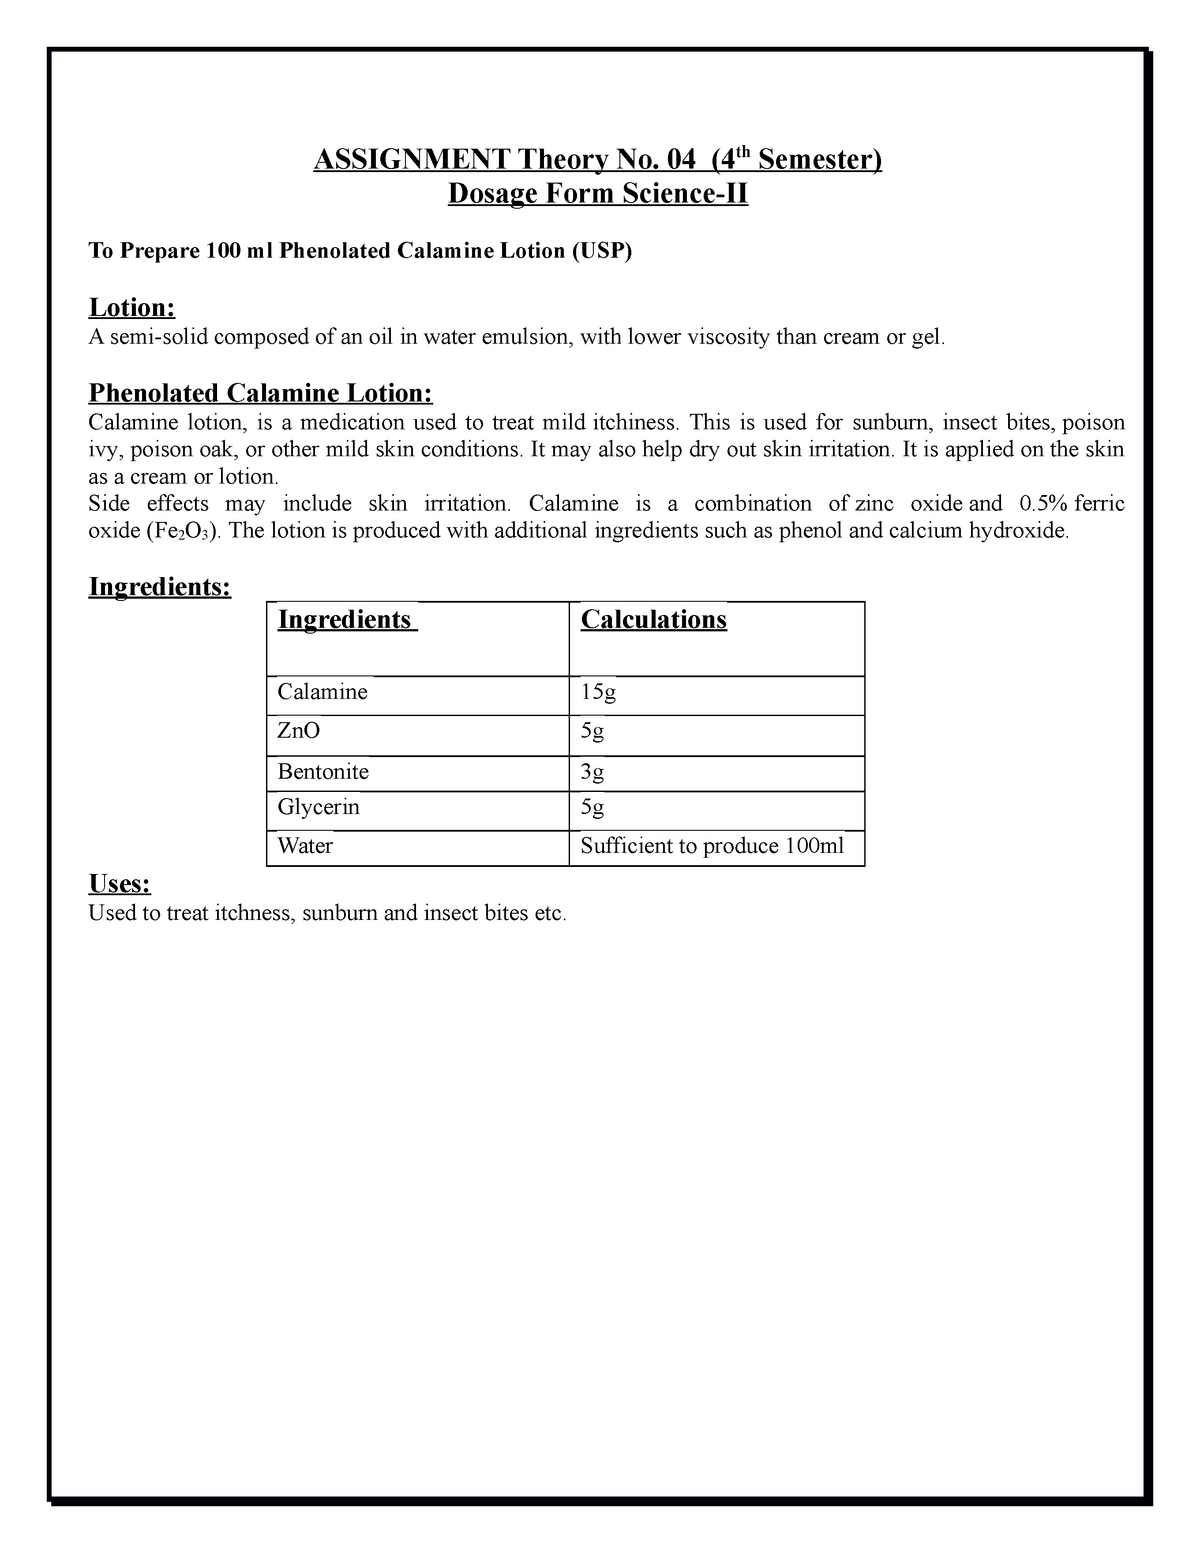 dosage form assignment pdf